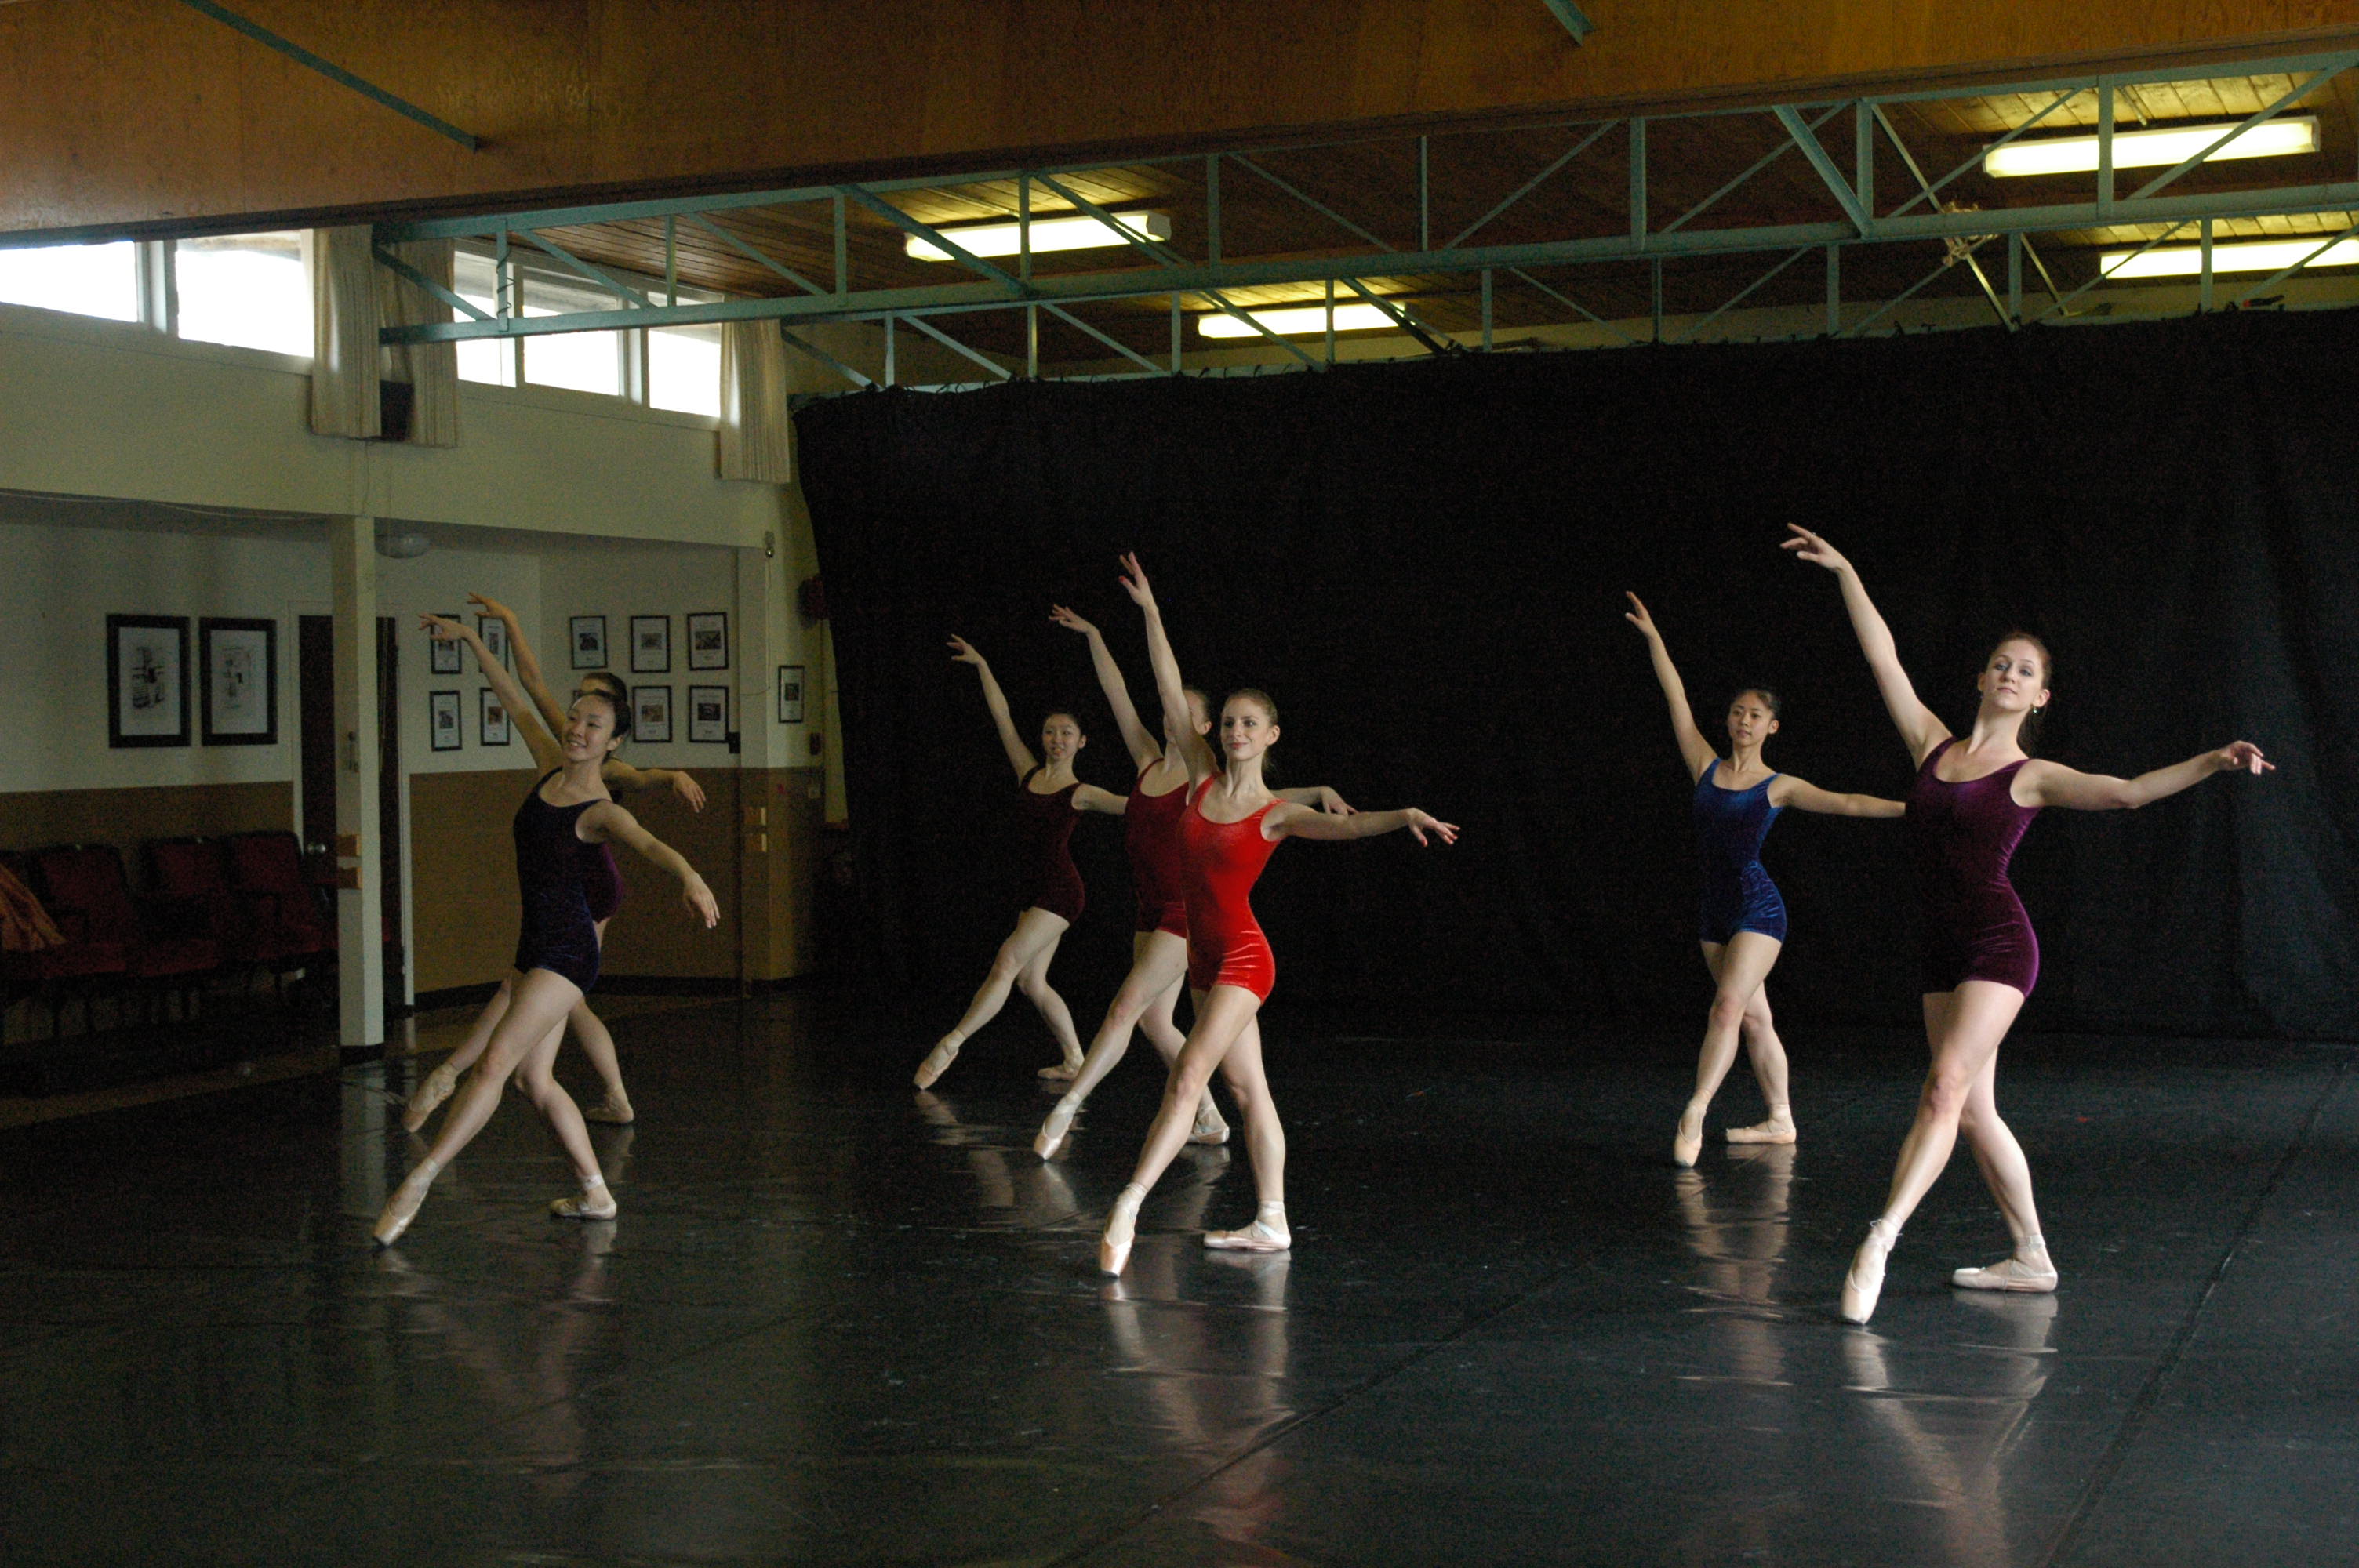 BALLET VICTORIA: Andre Bayne - prima ballerina (center front in red); Paul Destrooper - choreographer